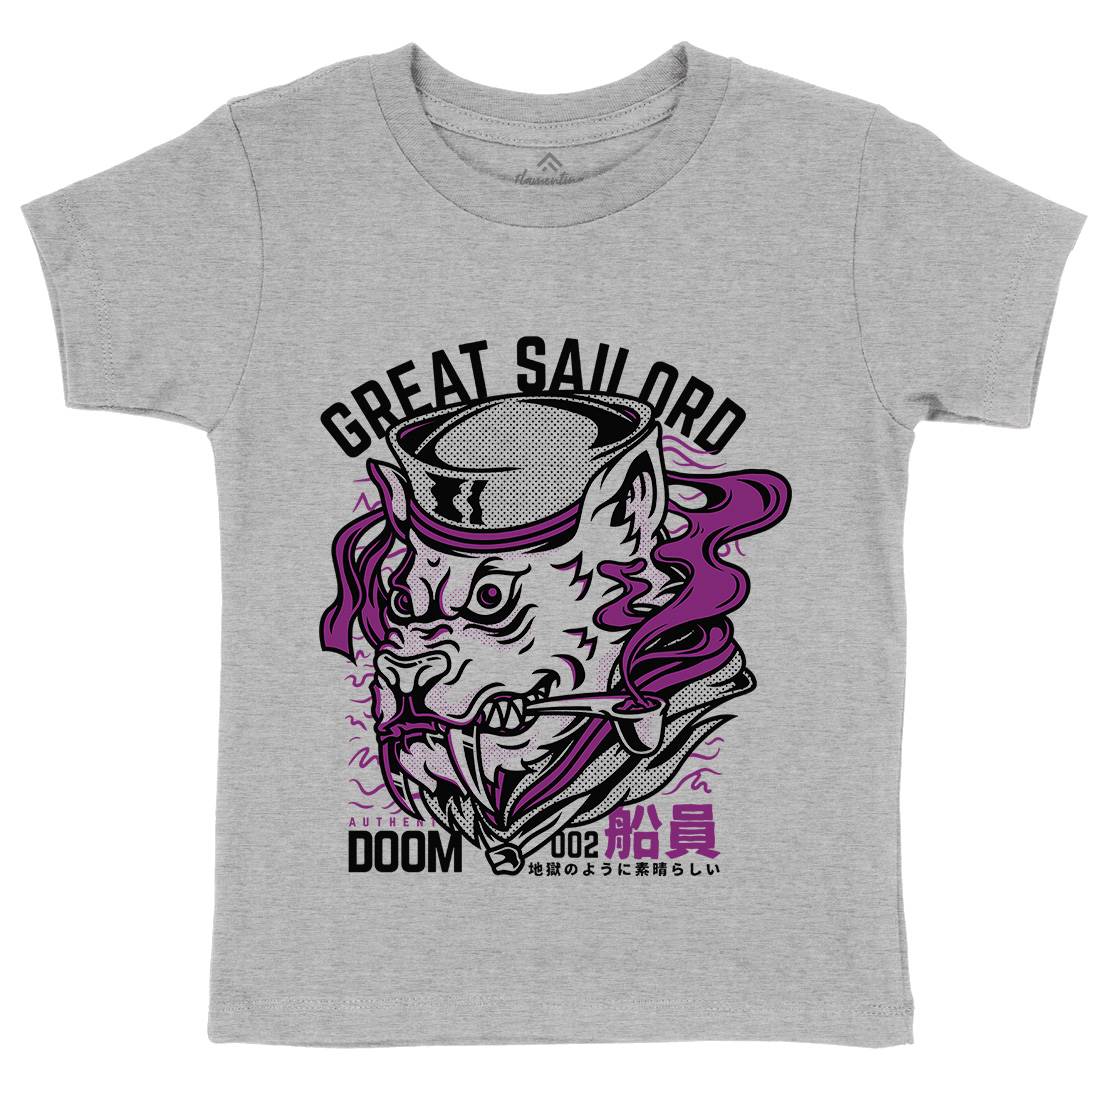 Great Sailord Kids Organic Crew Neck T-Shirt Navy D601